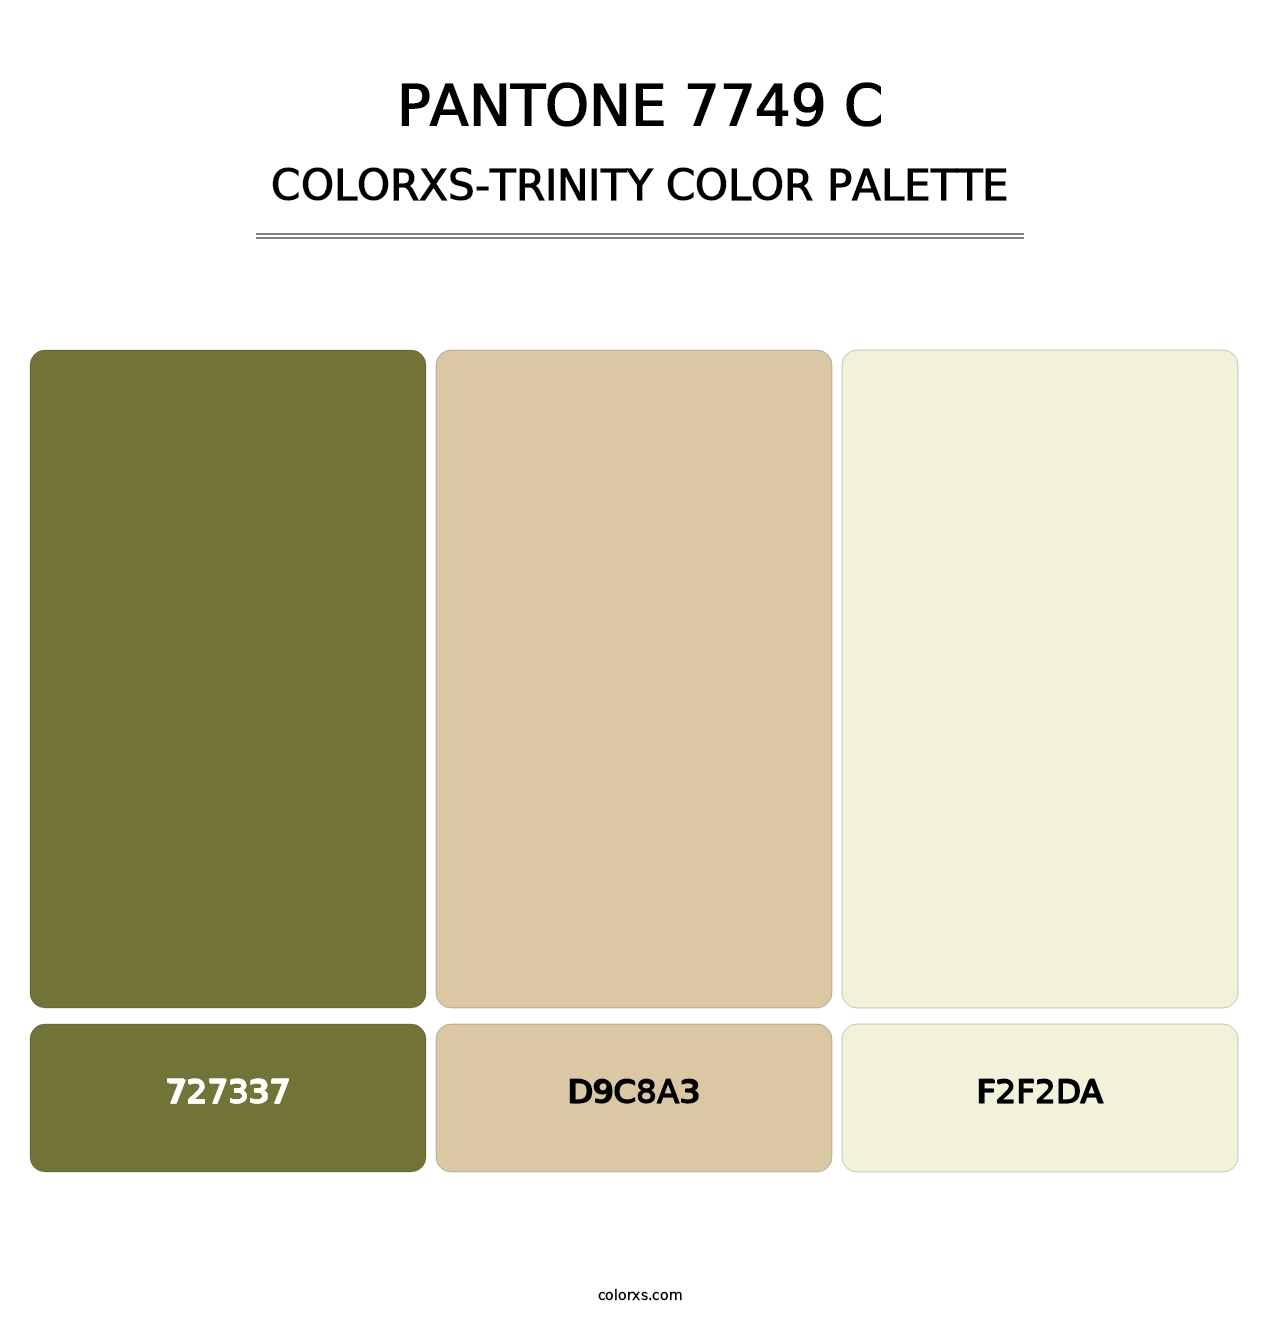 PANTONE 7749 C - Colorxs Trinity Palette